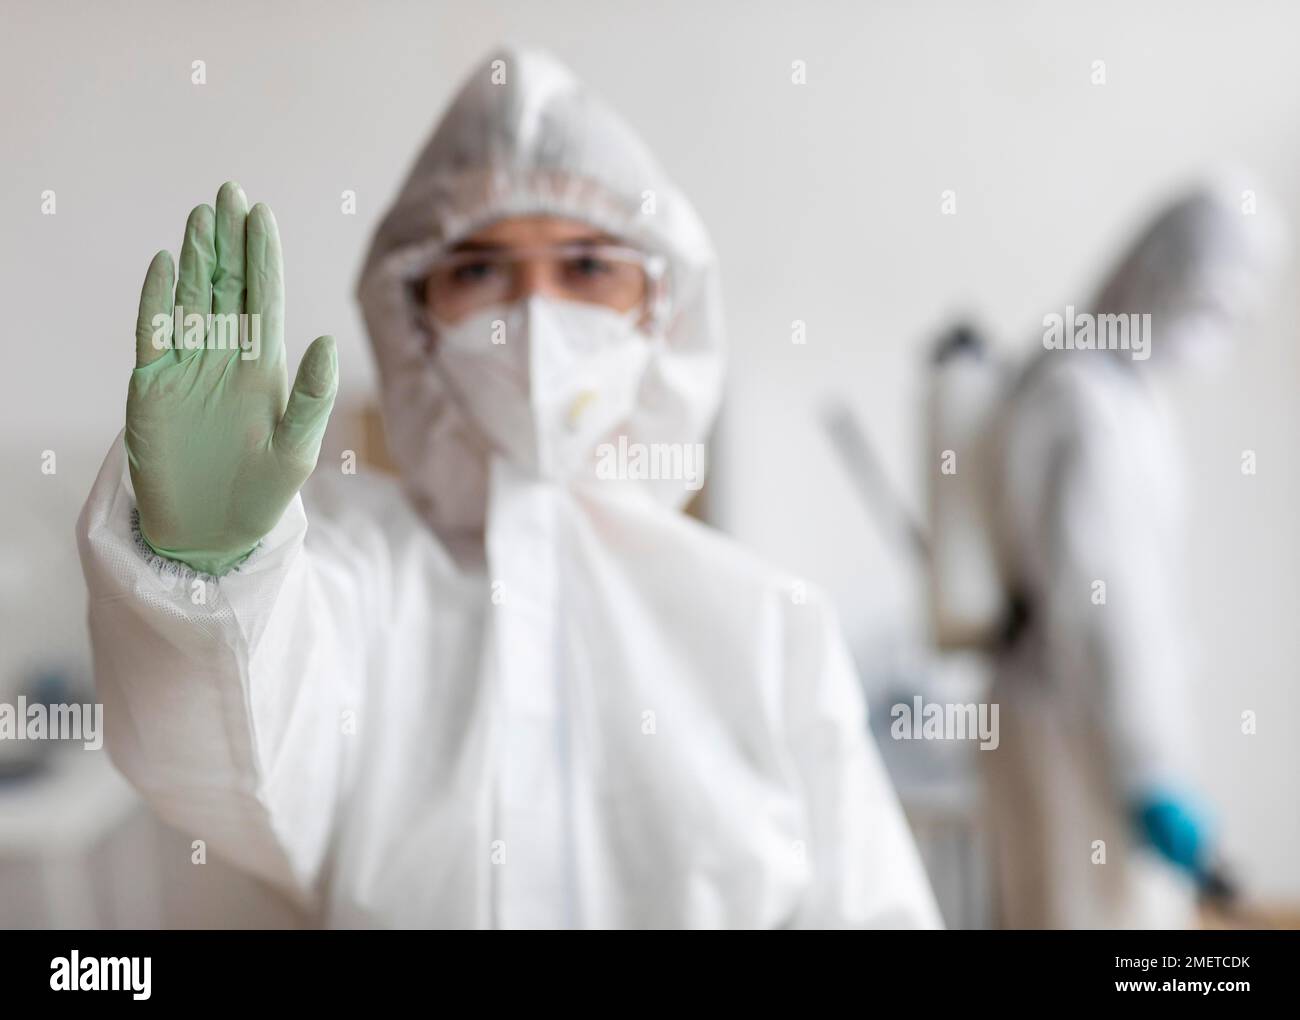 People wearing protective equipment disinfecting dangerous area Stock Photo